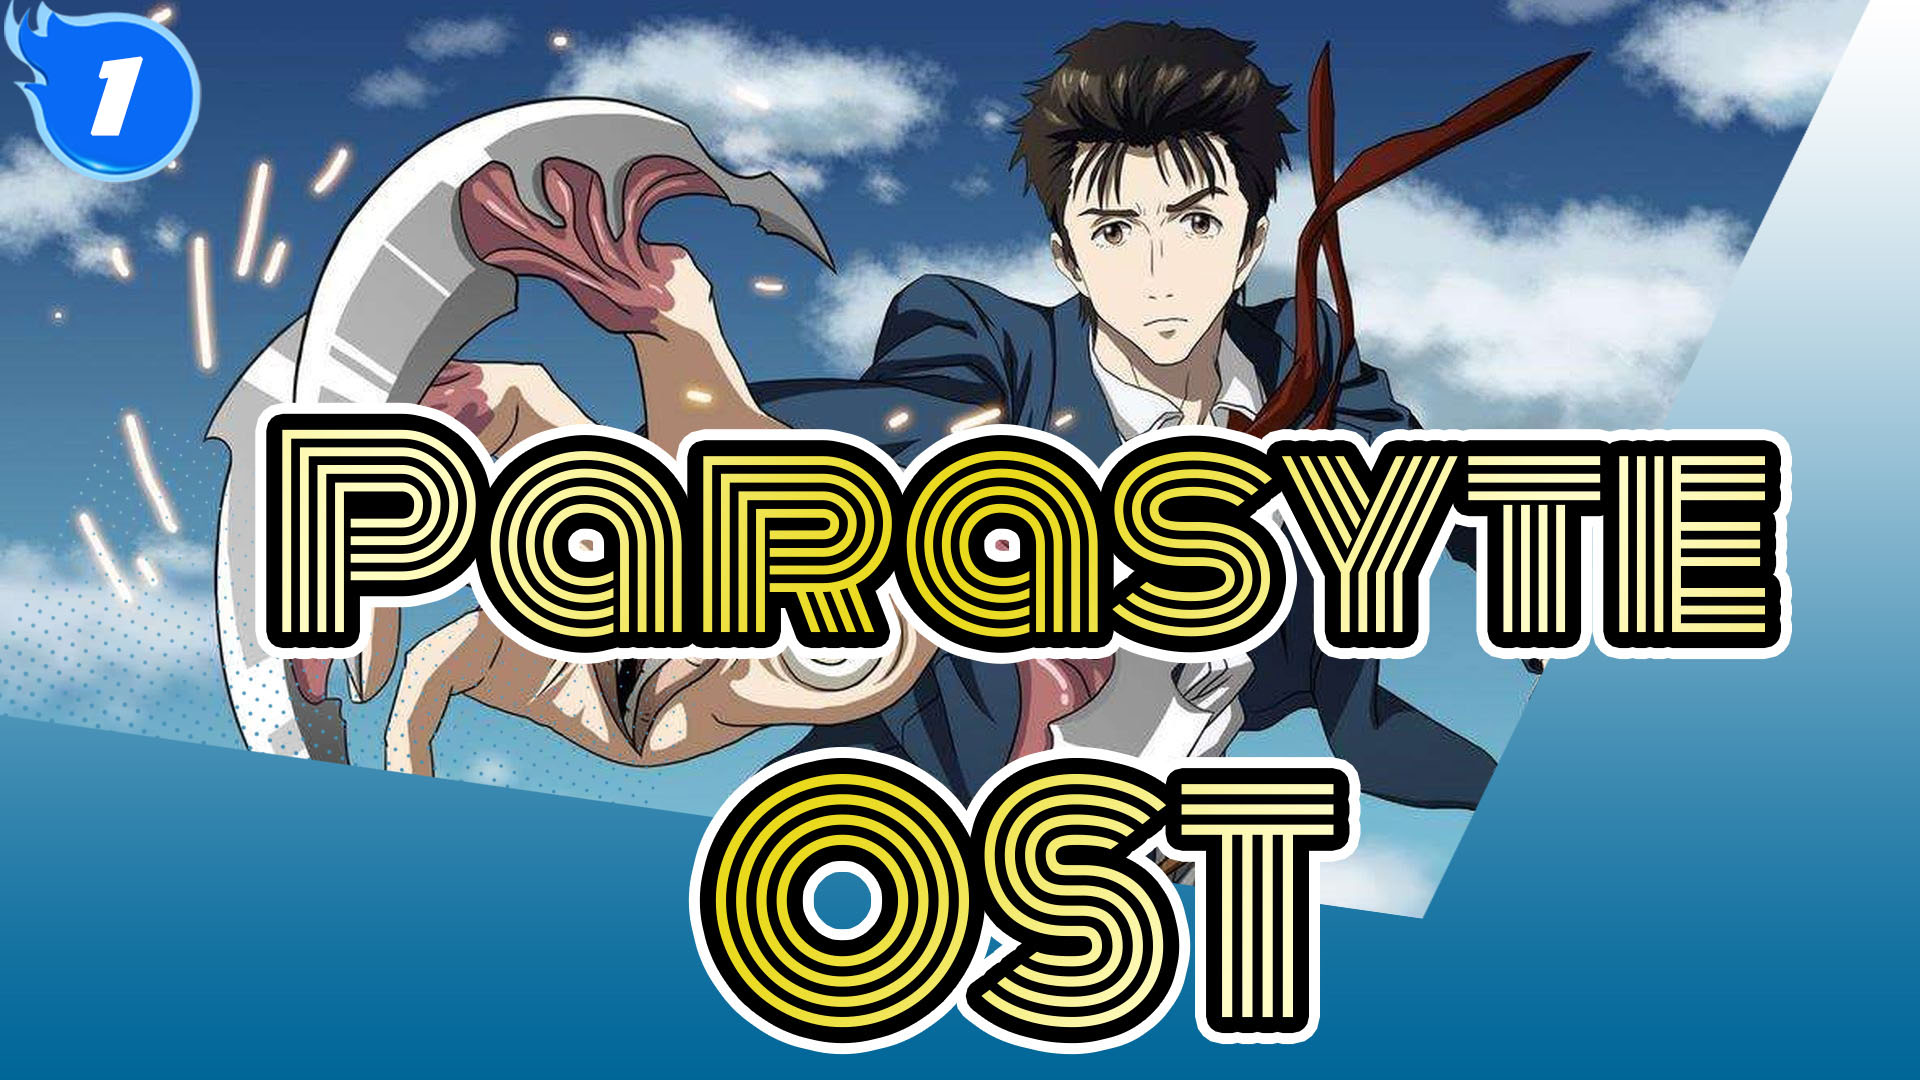 Parasyte|[Original Sound] Anime OST Complete / Download (320K)_1 - Bilibili